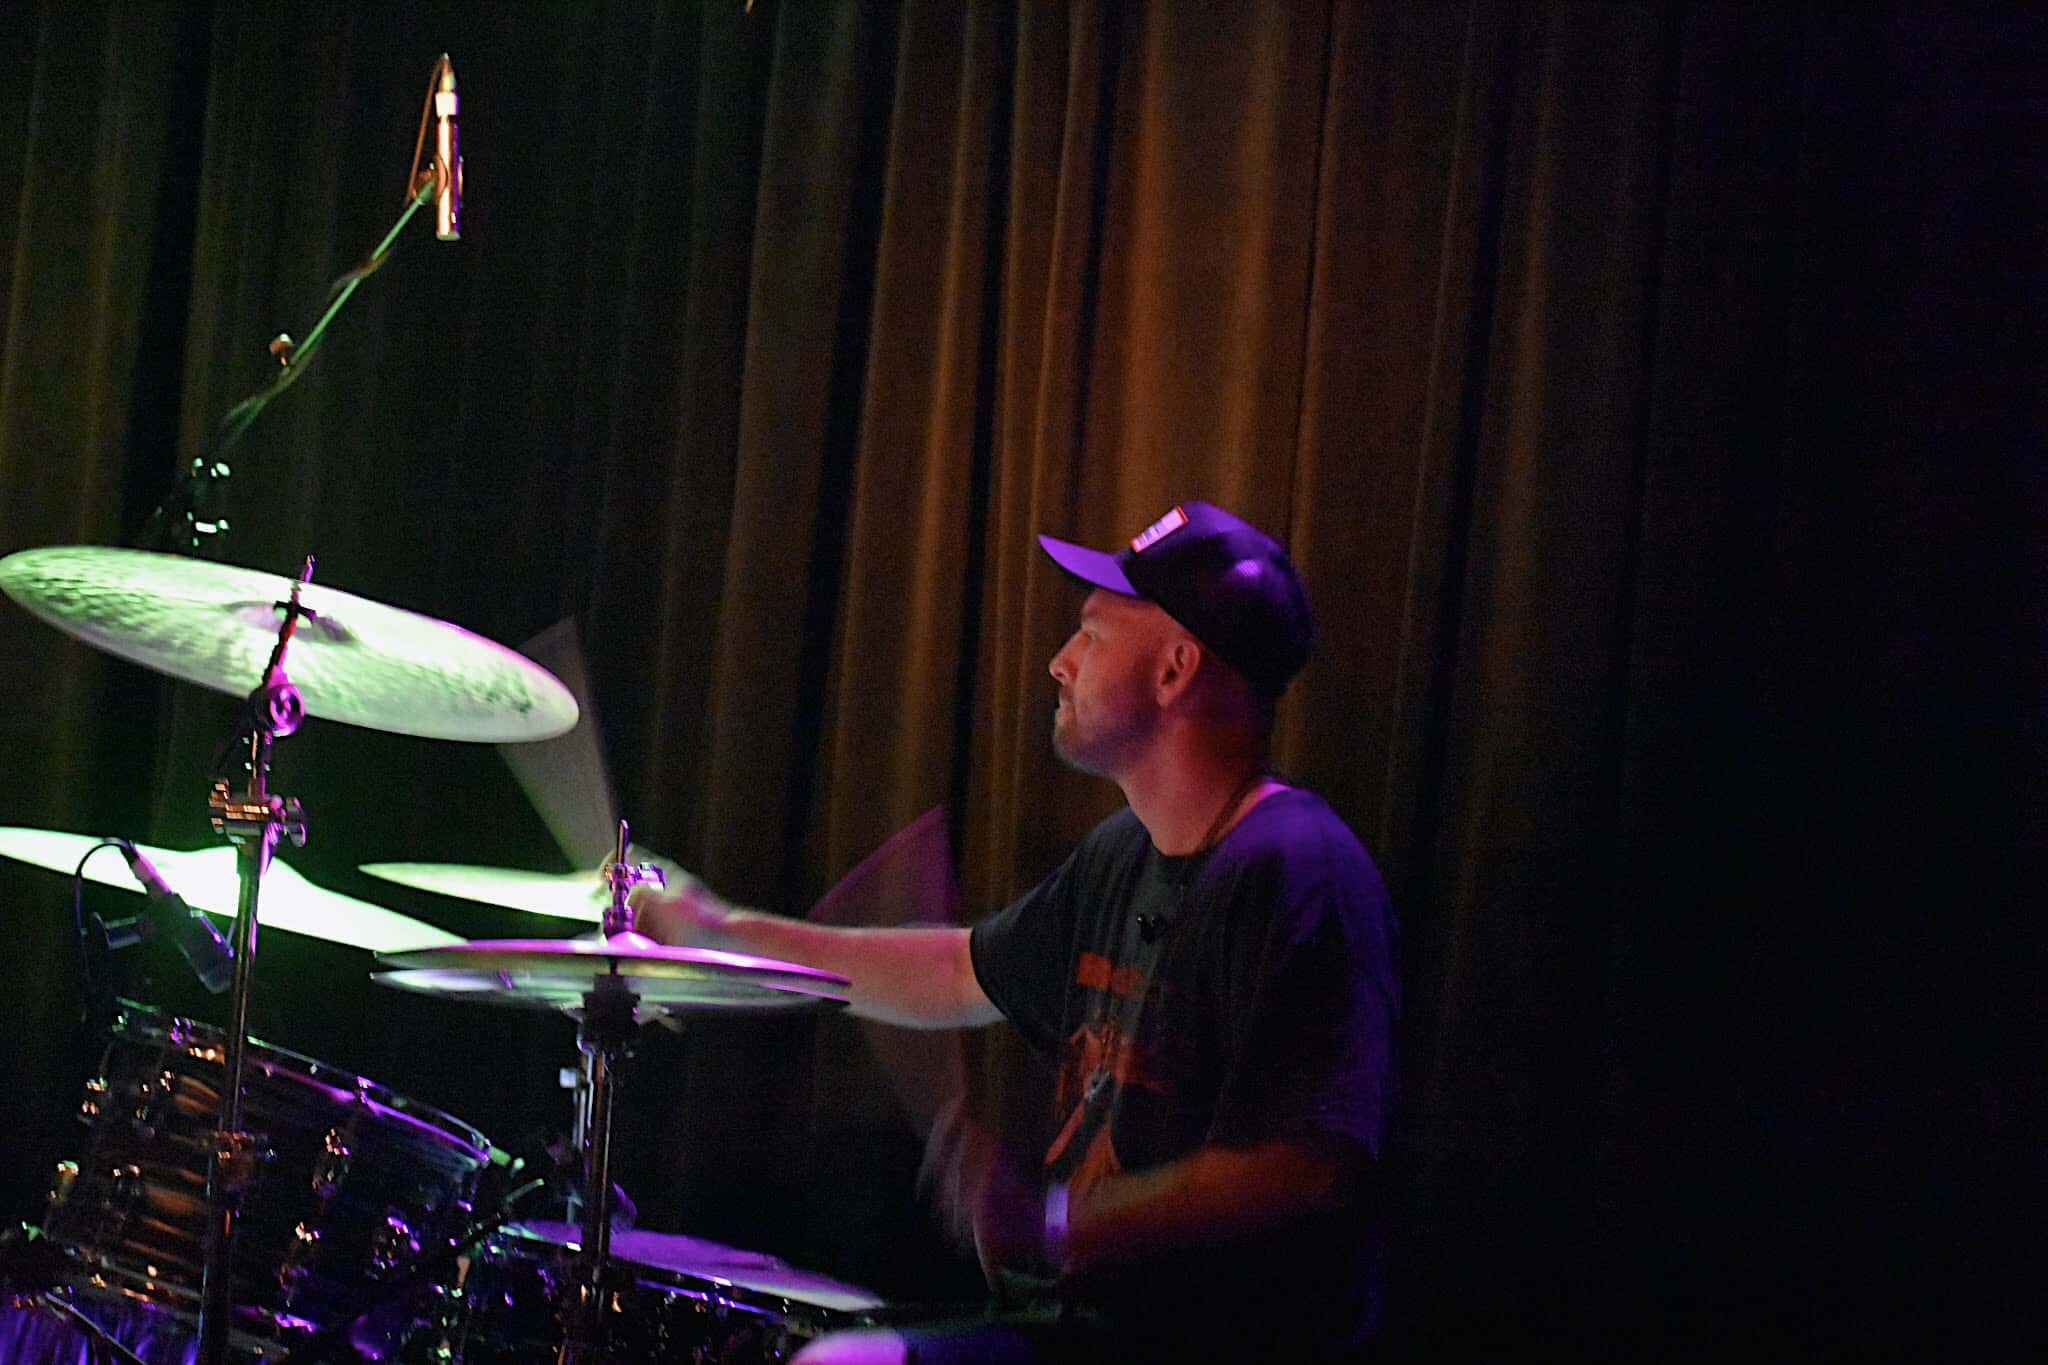 Drummer performing at the High Watt